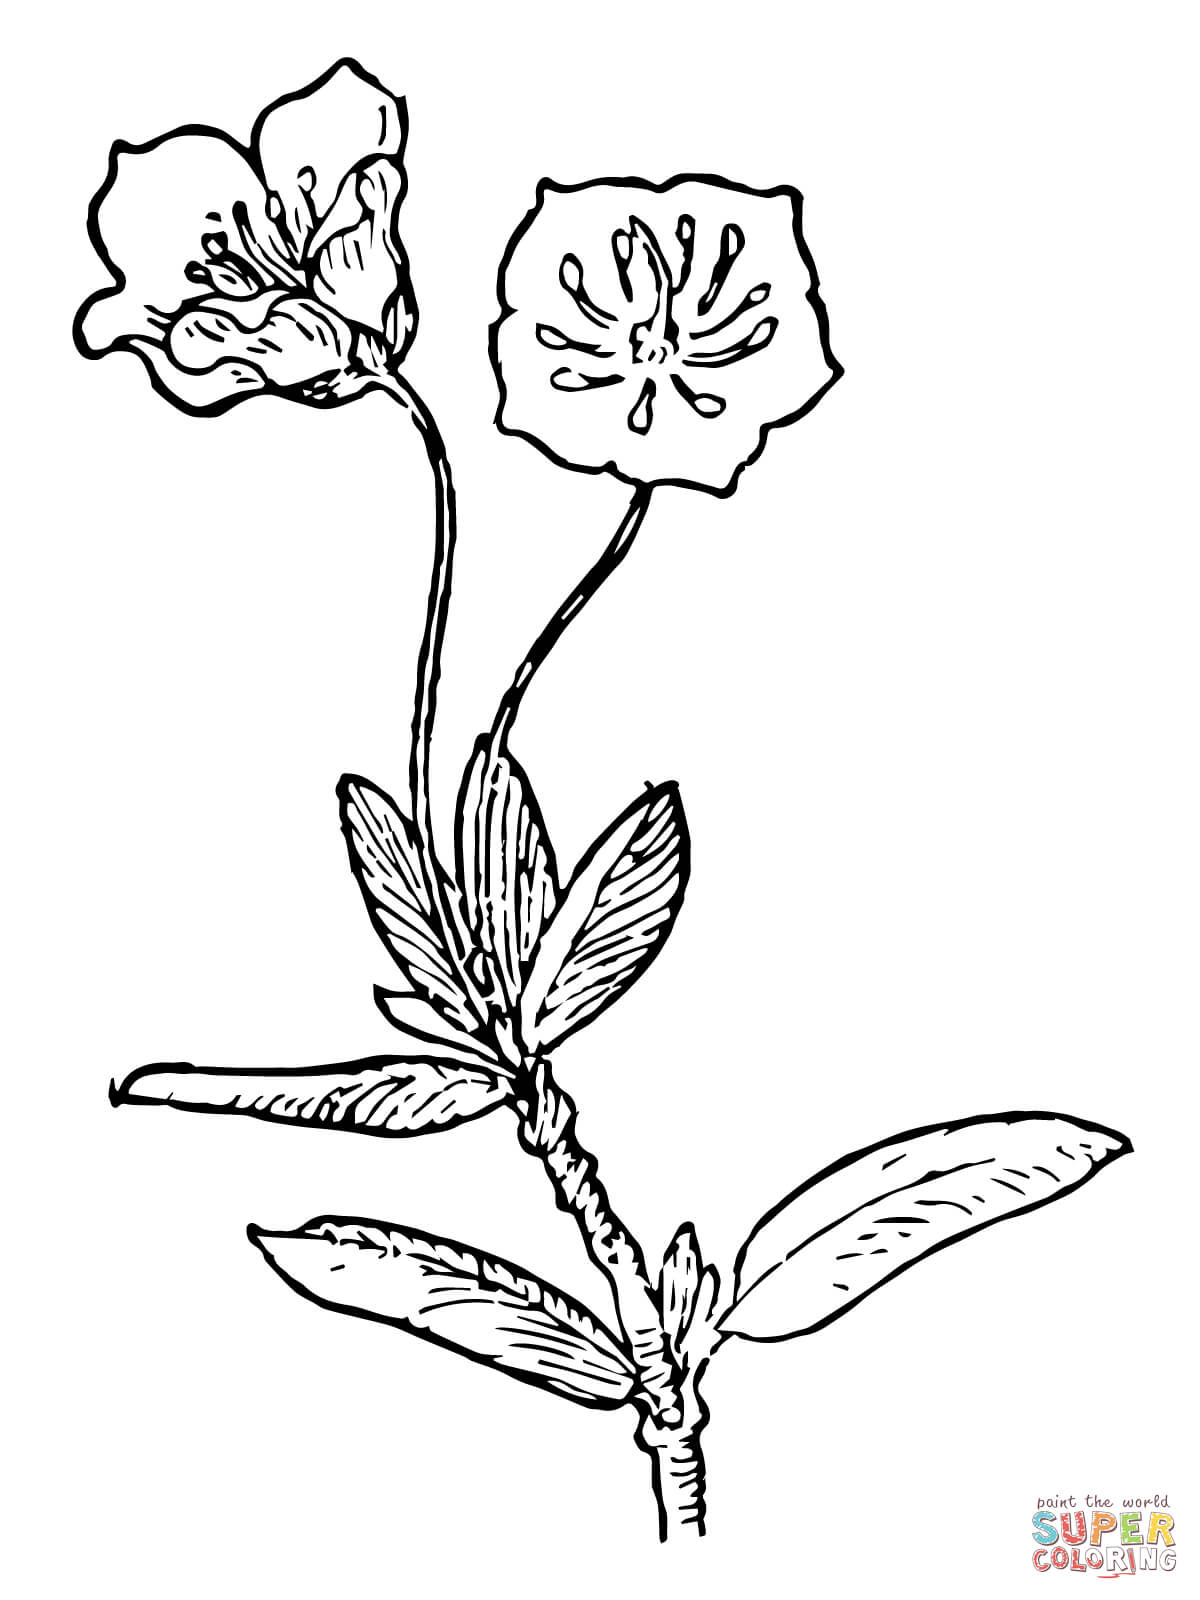 Kalmia Microphylla of Moeraslaurier van Laurier